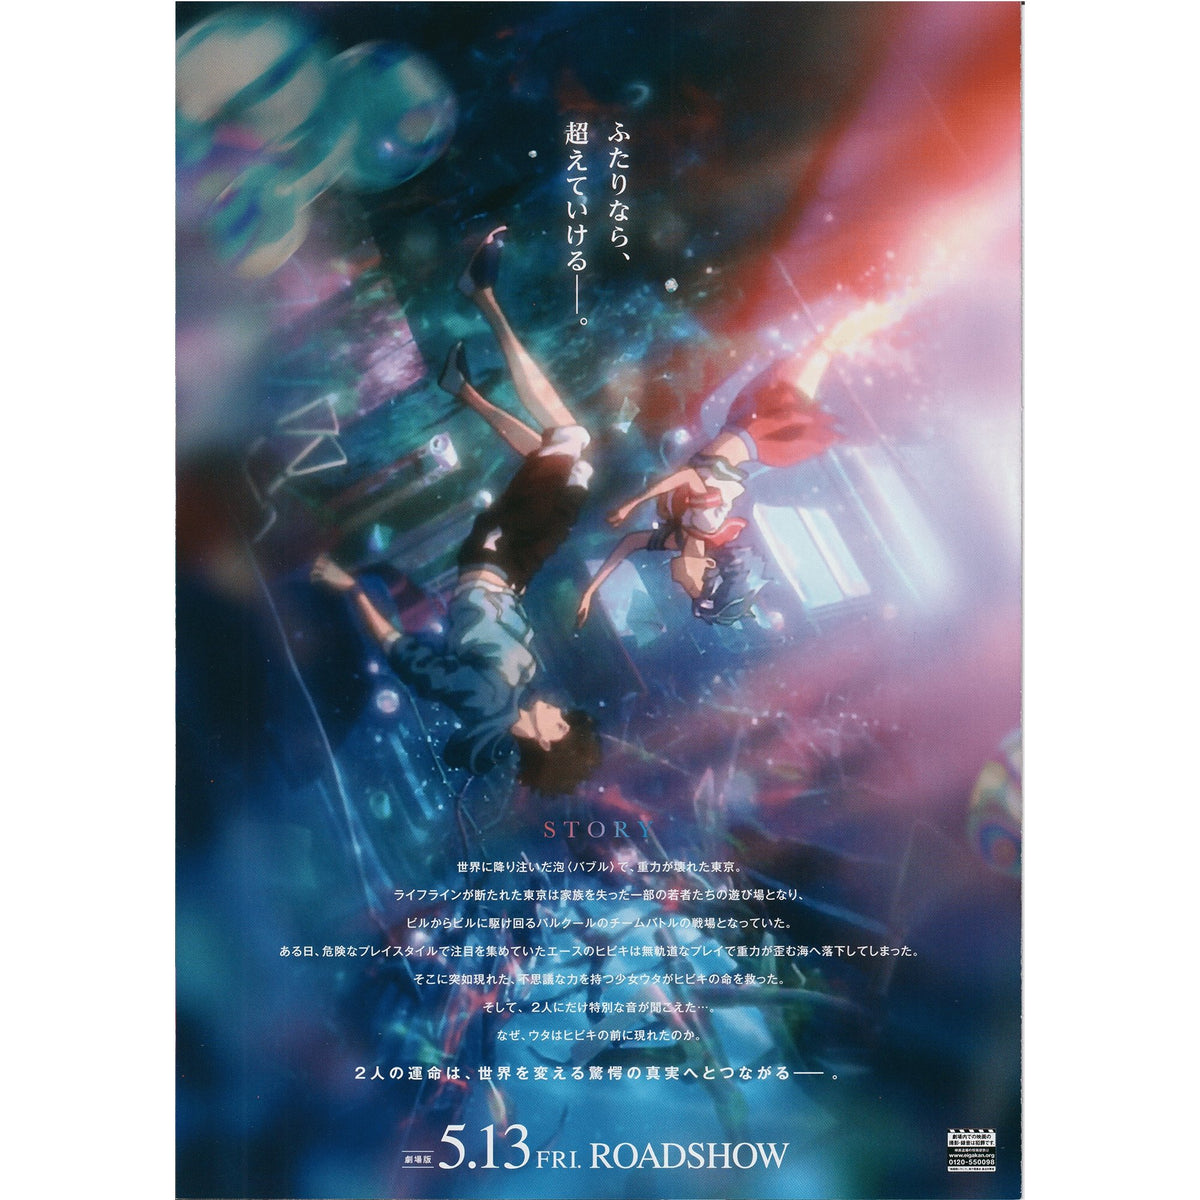 Japanese Chirashi B5 Mini Anime Movie Poster Bubble Baburu 2022 - Sugoi JDM